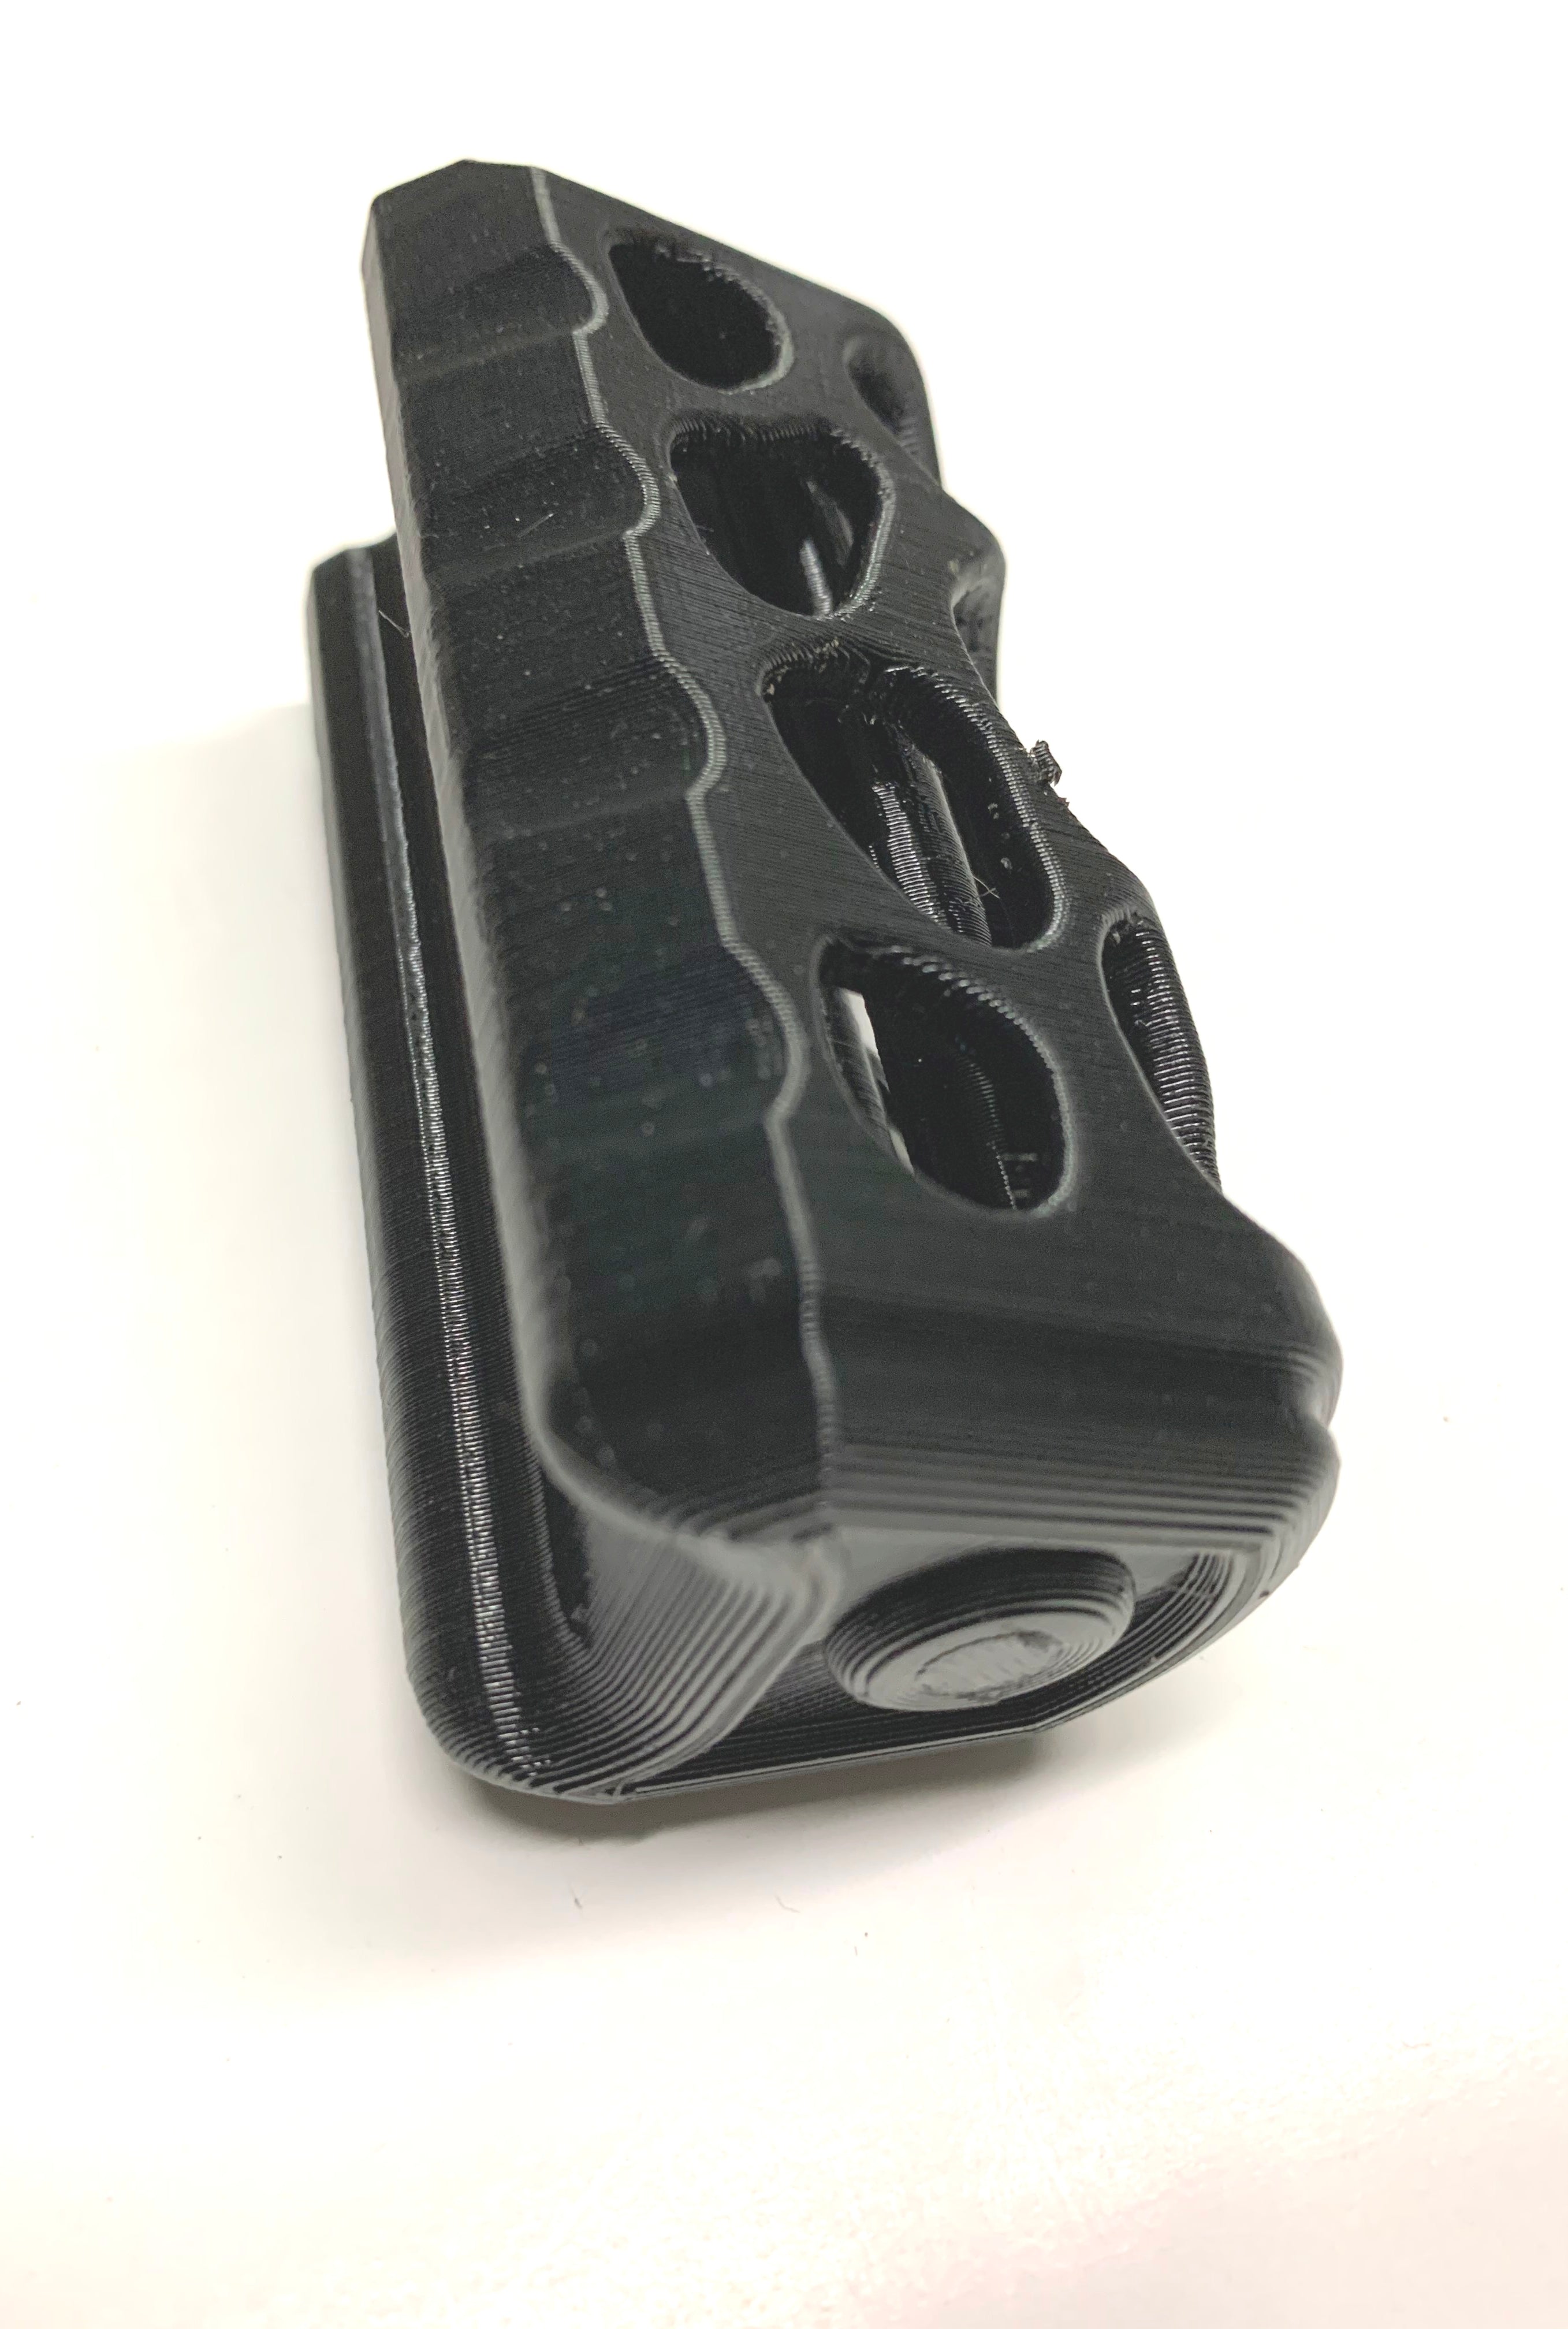 Azodin KP3 Paintball Gun Low Profile Skeletonized Replacement Pump Handle